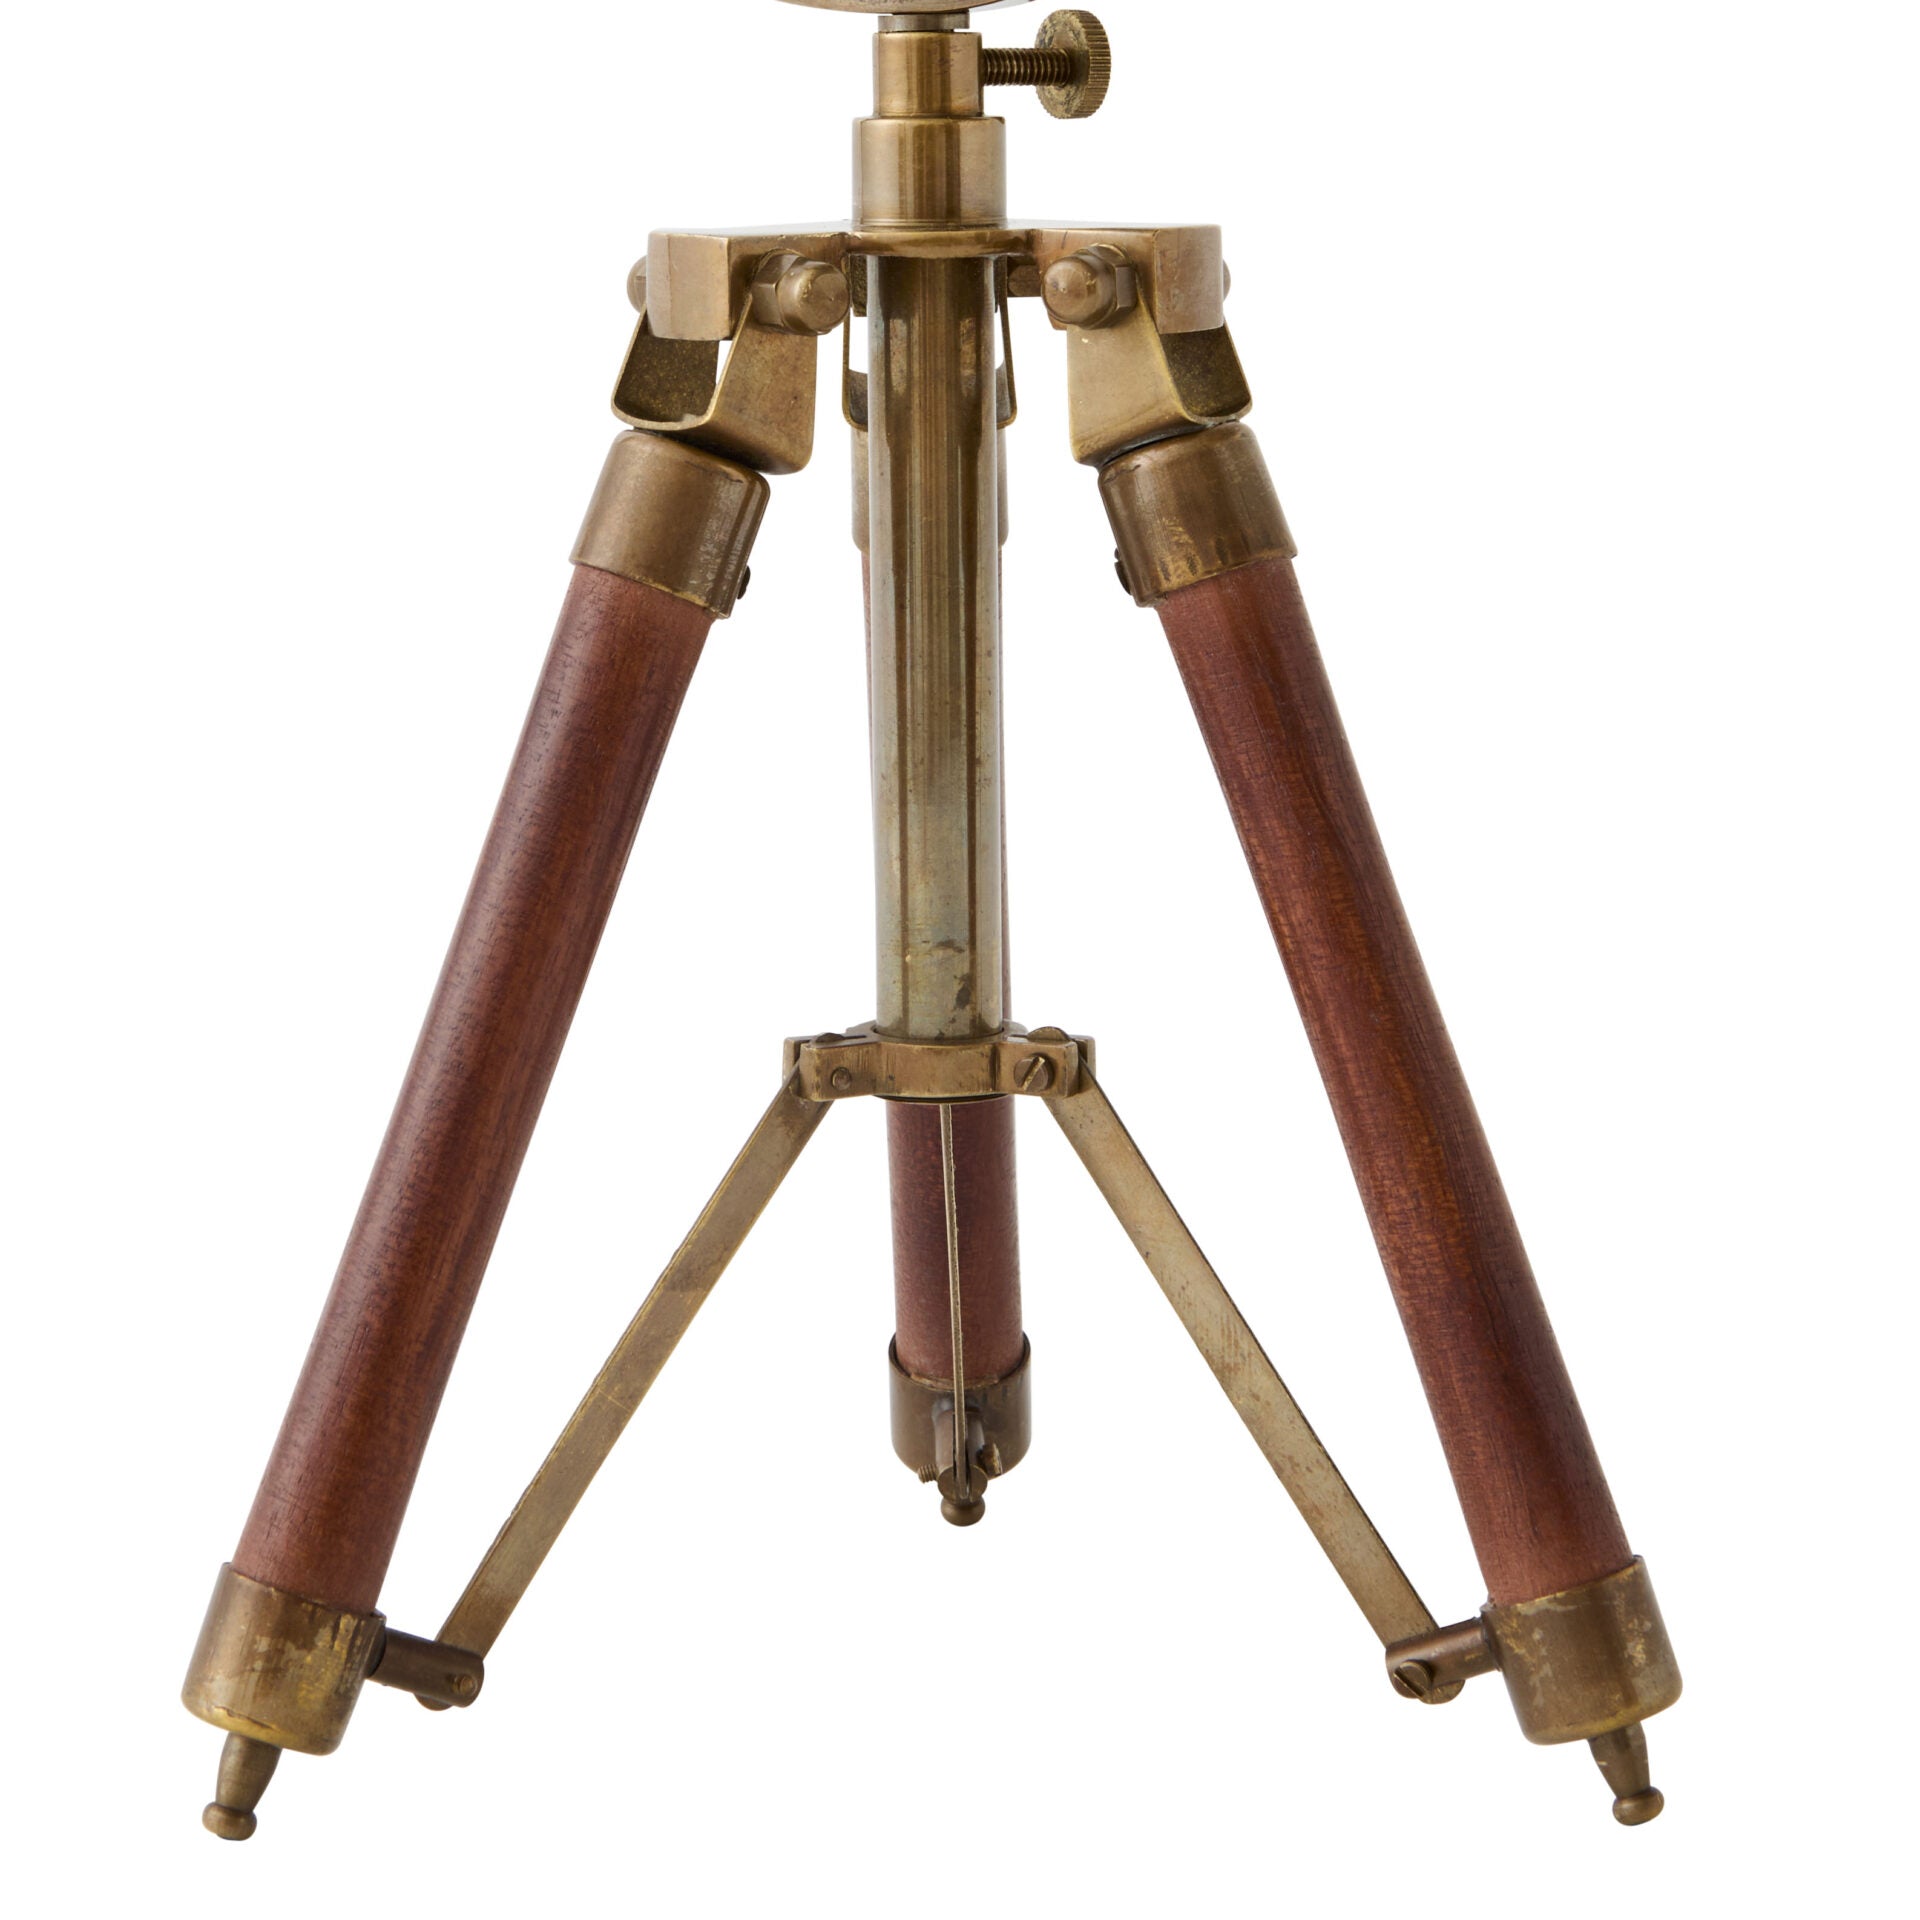 Surveyor's Tripod Magnifier - Bronze - Notbrand